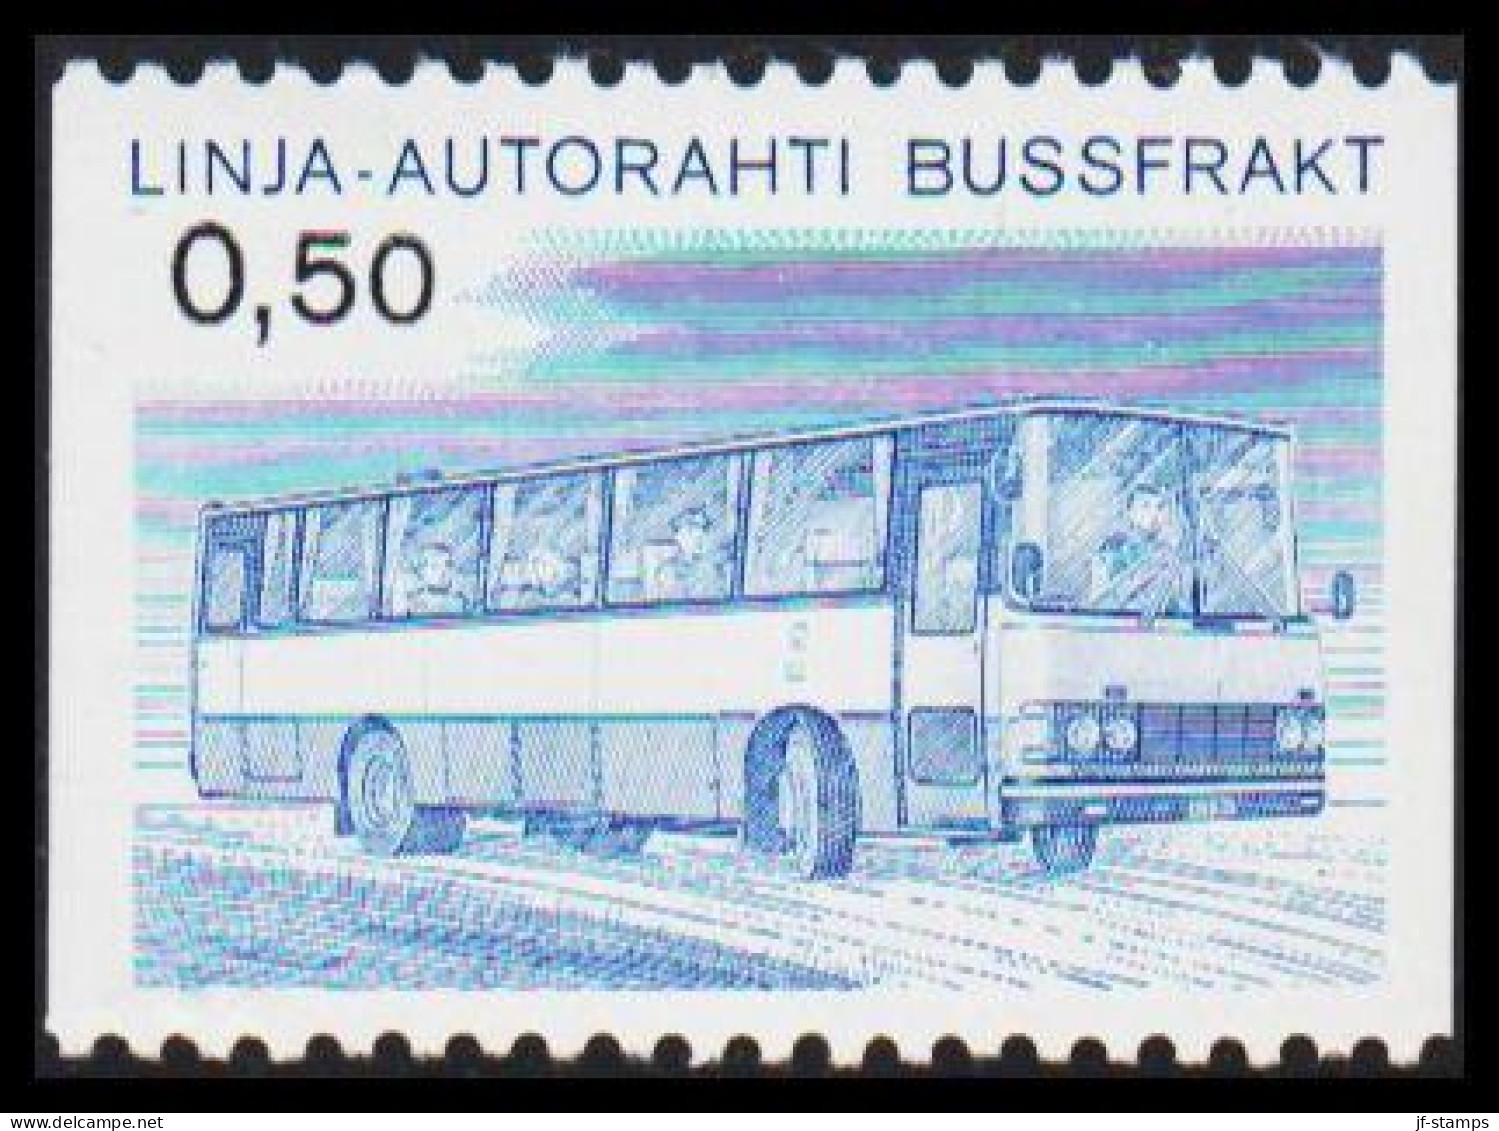 1981. FINLAND. LINJA-AUTORAHTI - BUSSFRAKT. 0,50 Mk. Never Hinged. (Michel 14) - JF535613 - Postbuspakete